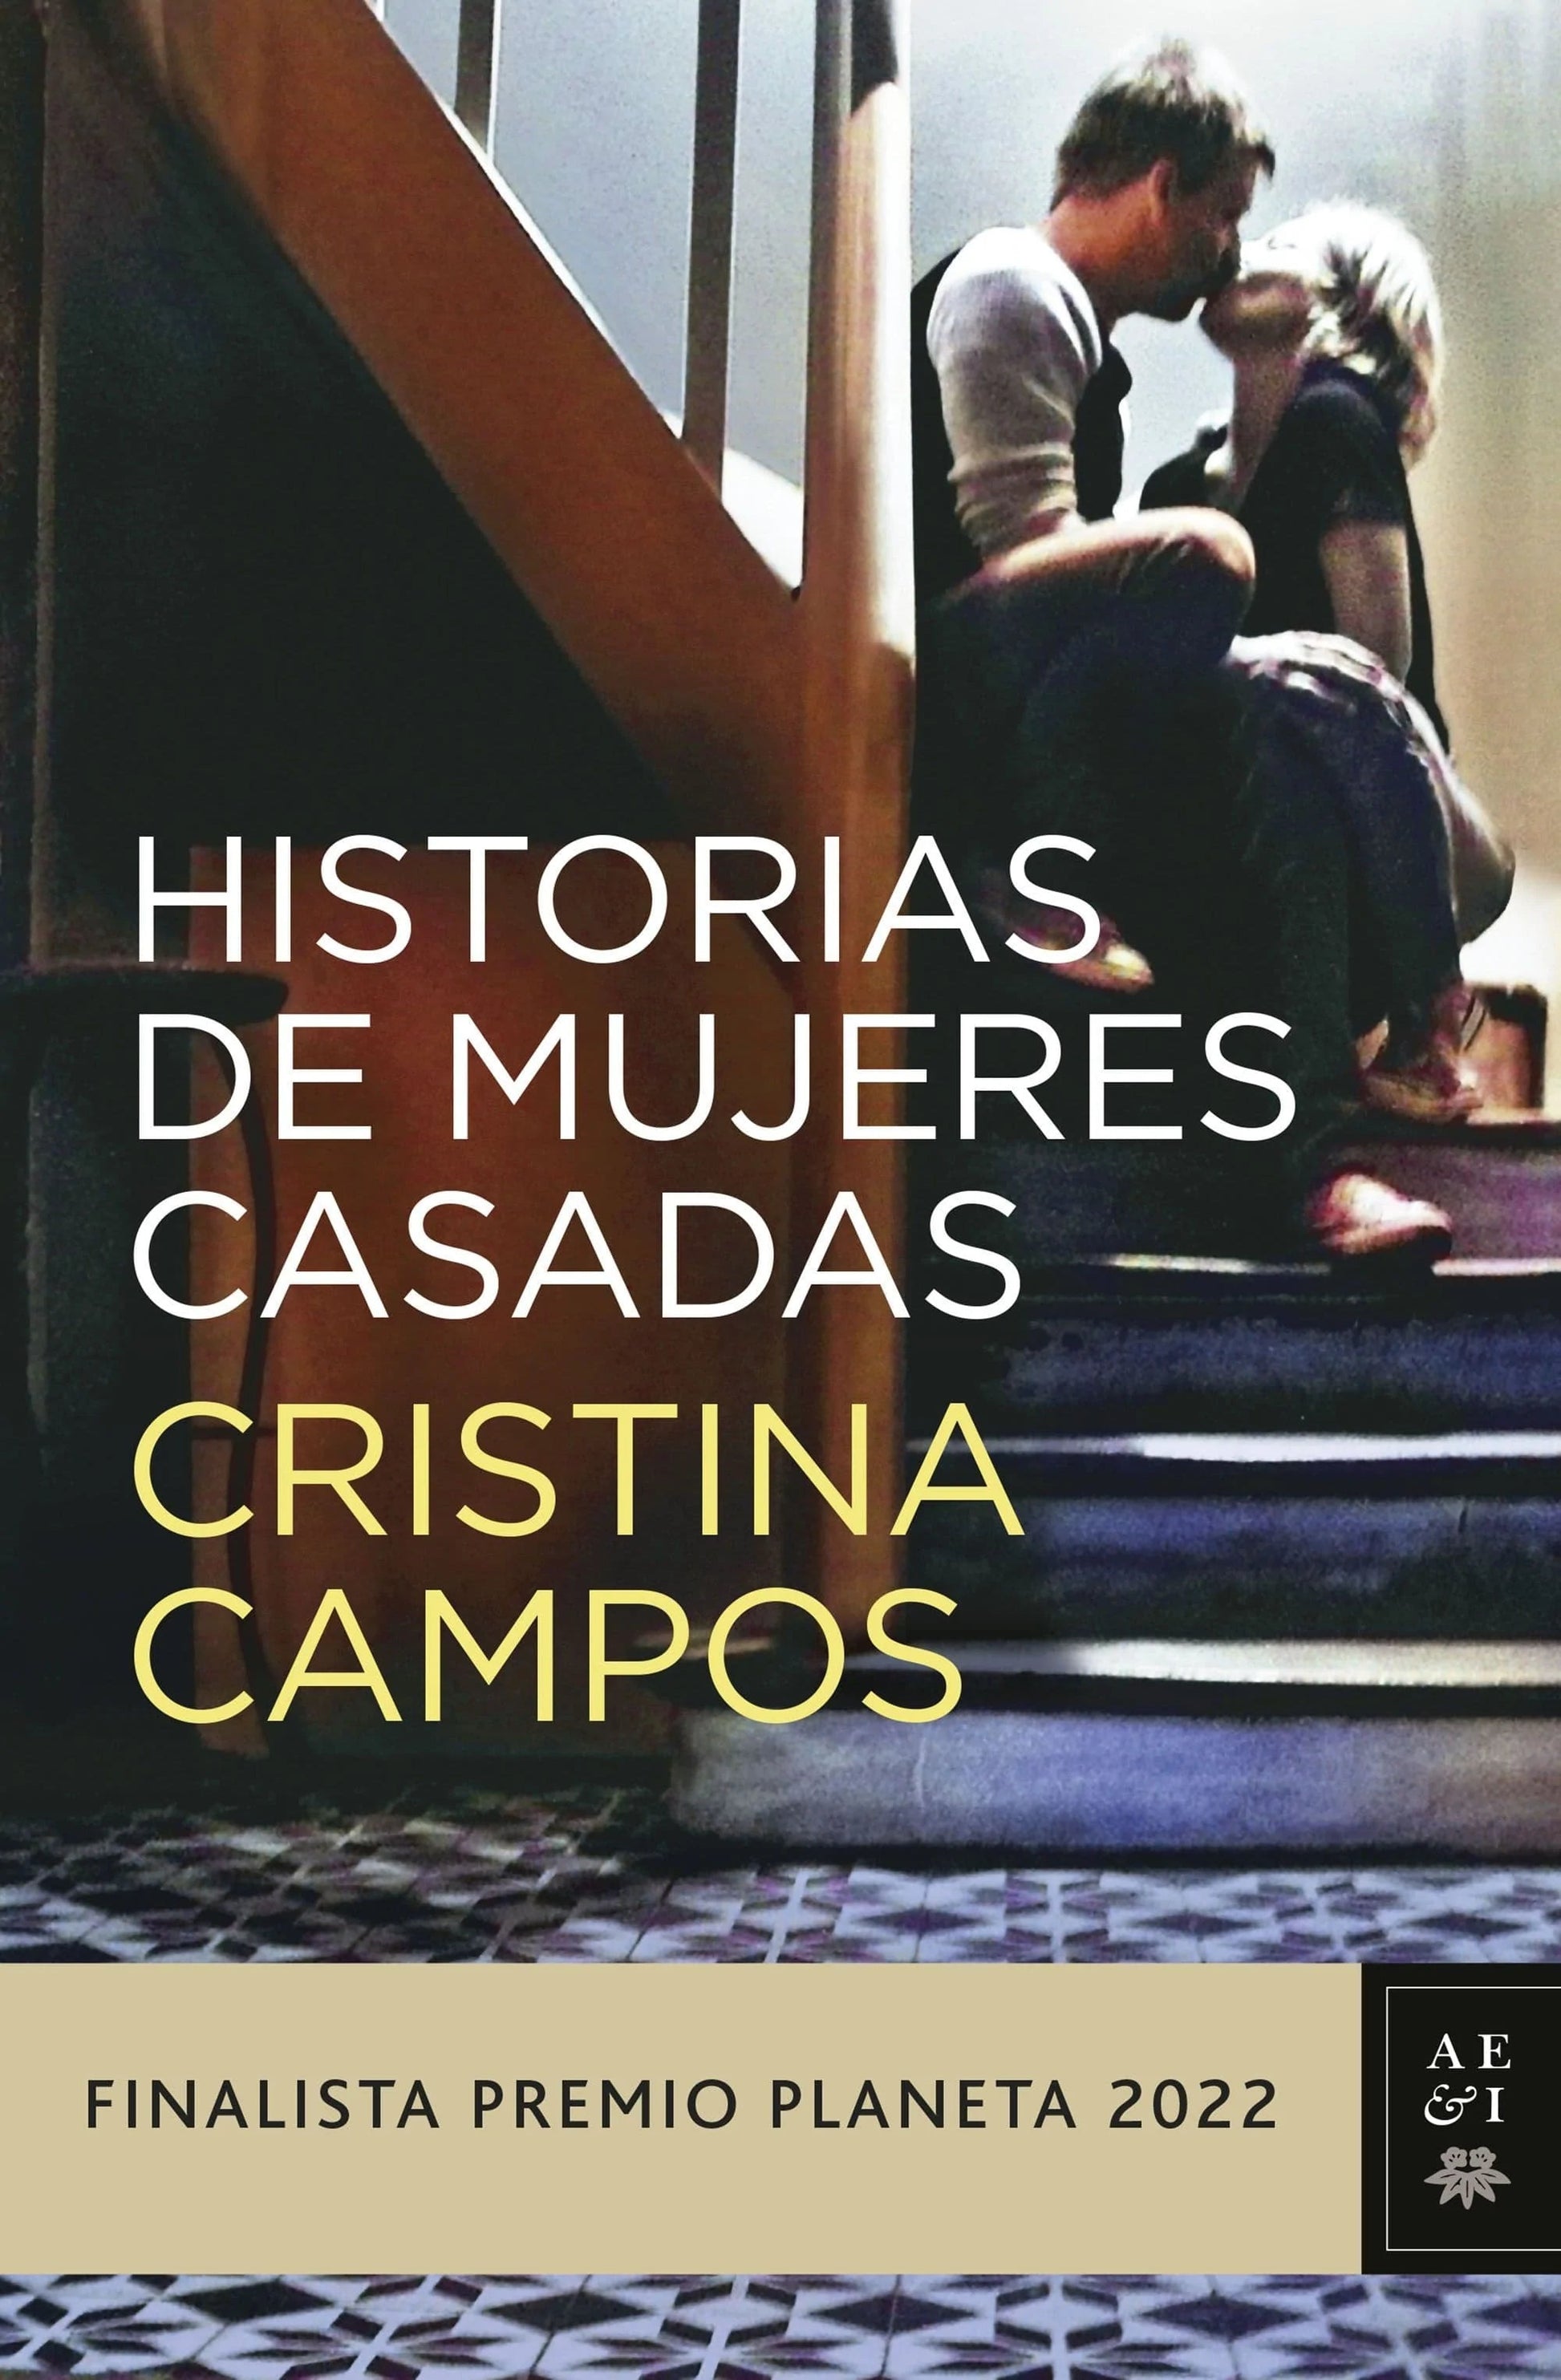 Comprar libro  HISTORIAS DE MUJERES CASADAS - CRISTINA CAMPOS con envío rápido a todo Chile